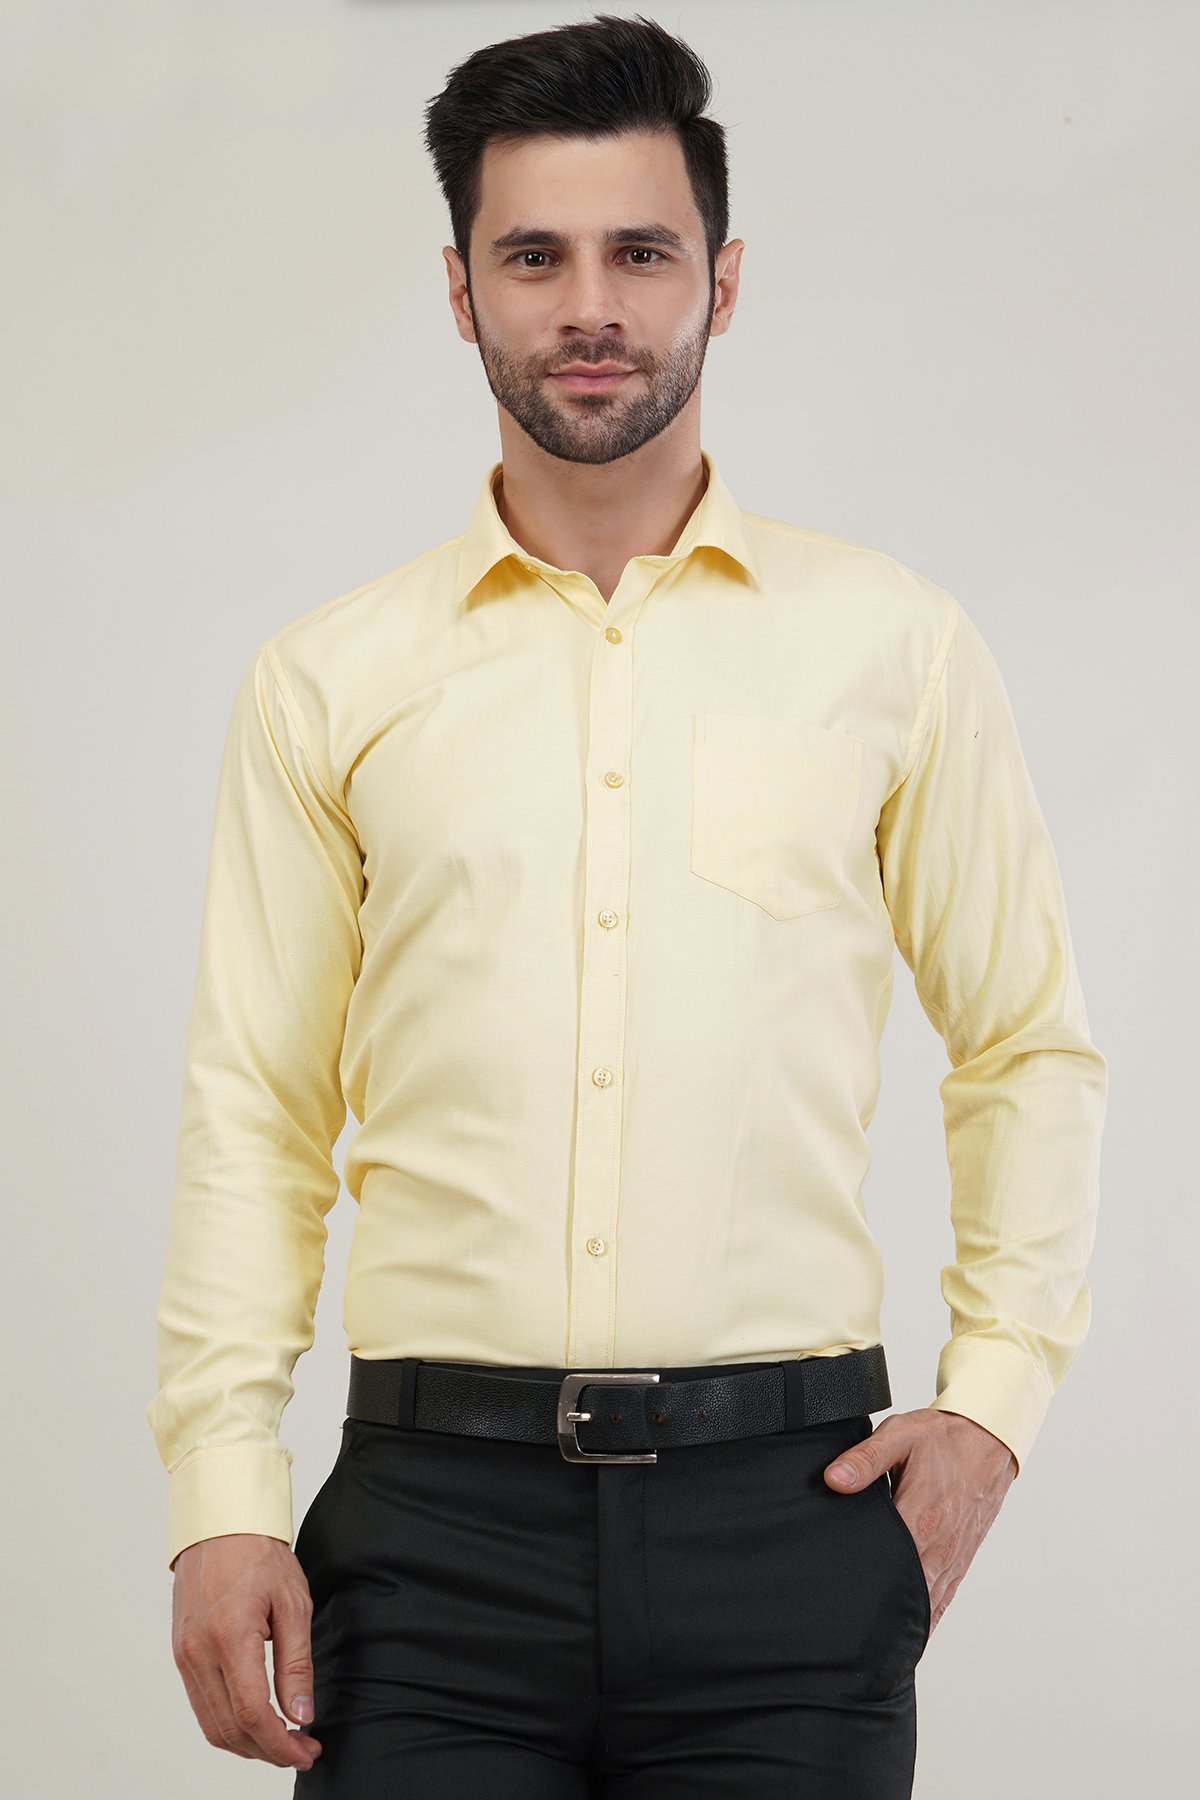 lemon Color Super Soft Premium Dobby Cotton Formal Shirt For Men’s